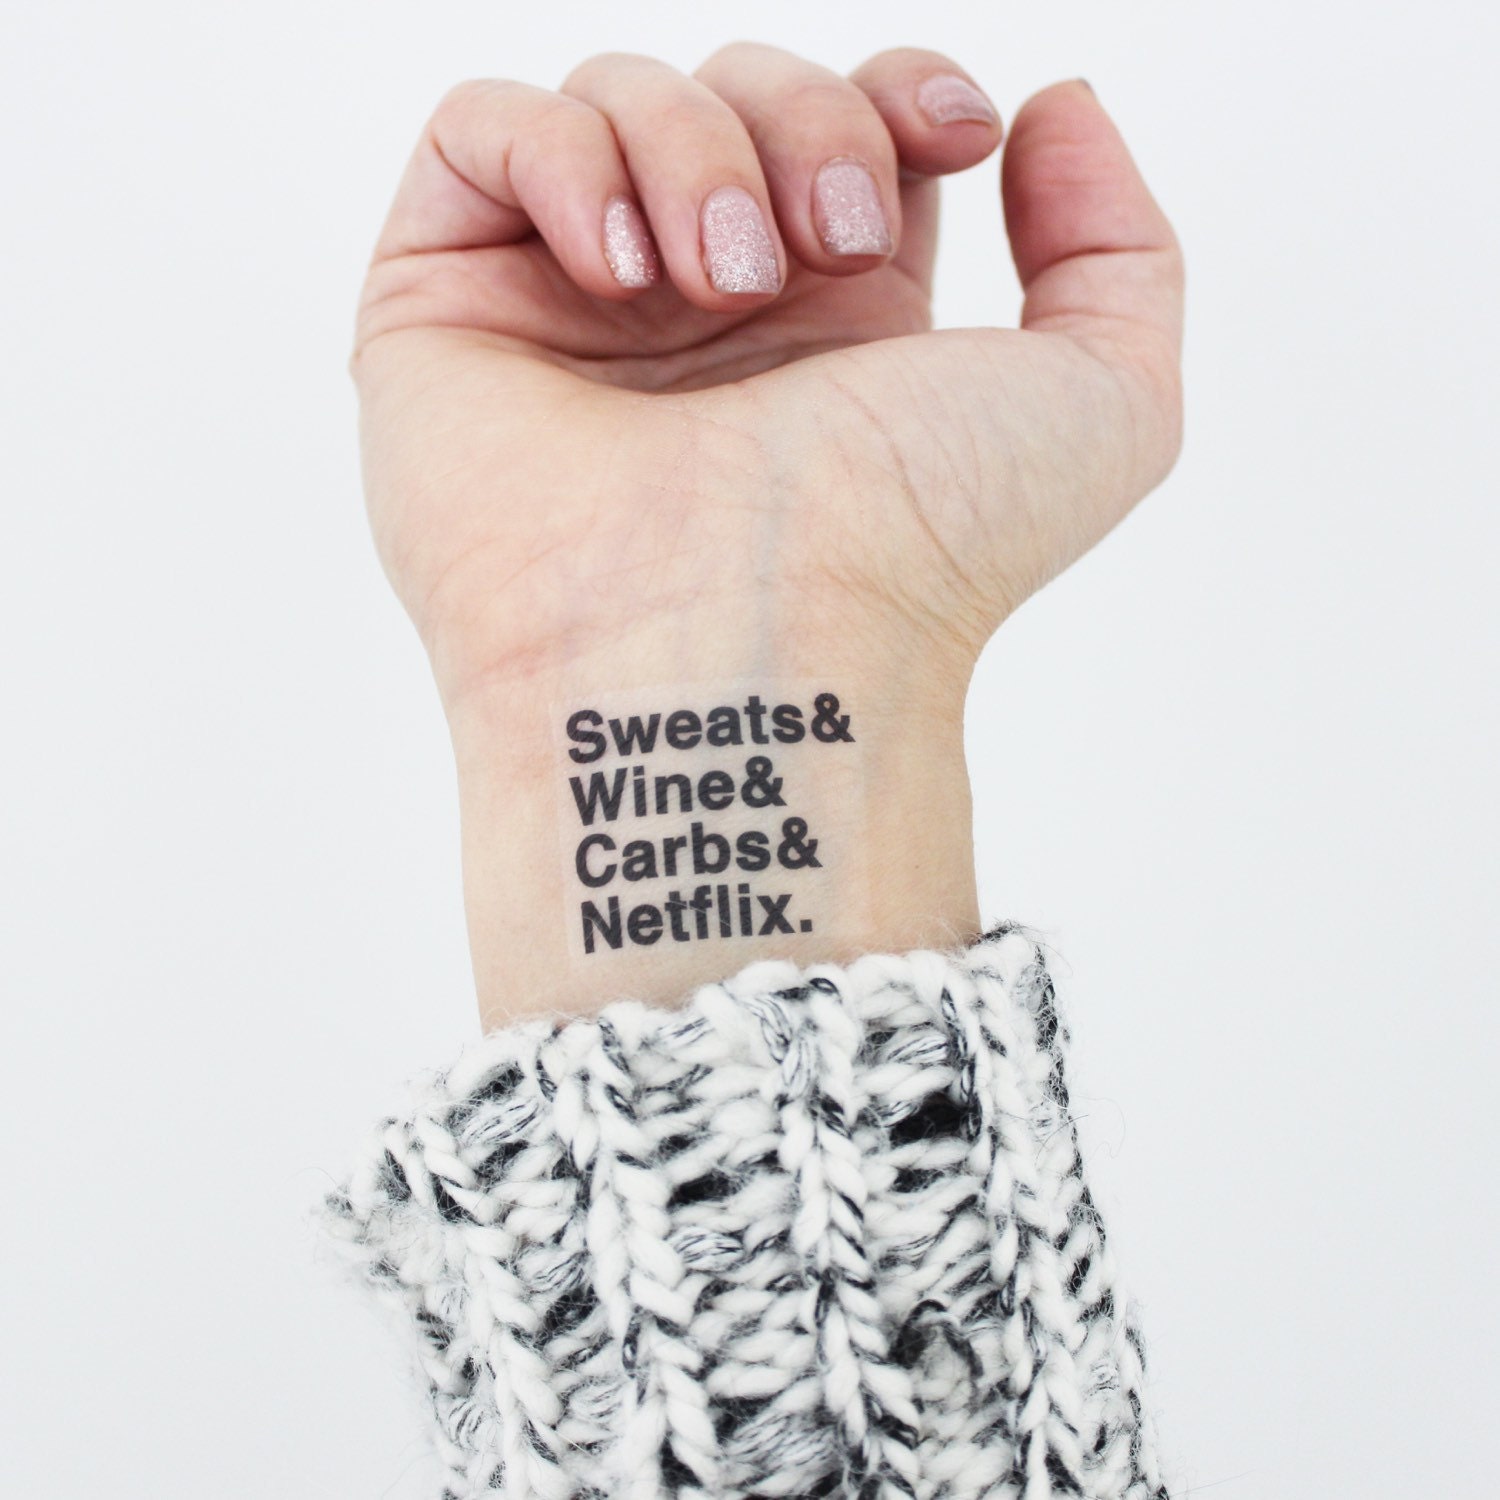 3 Netflix Temporary Tattoos